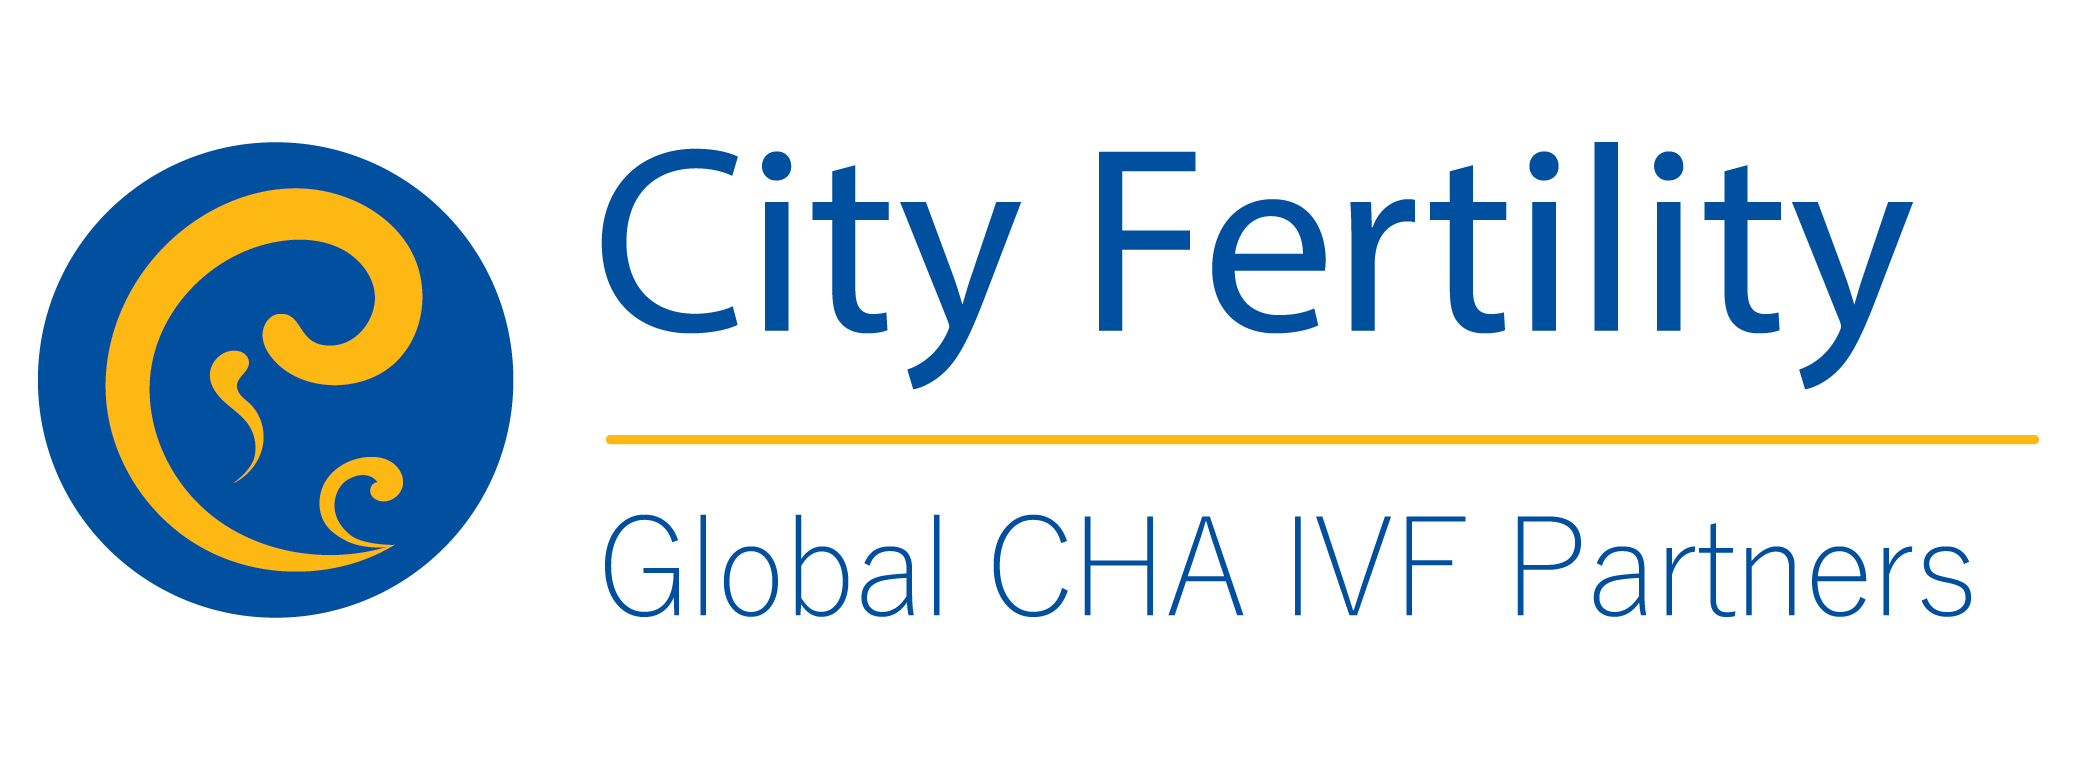 City Fertility Group